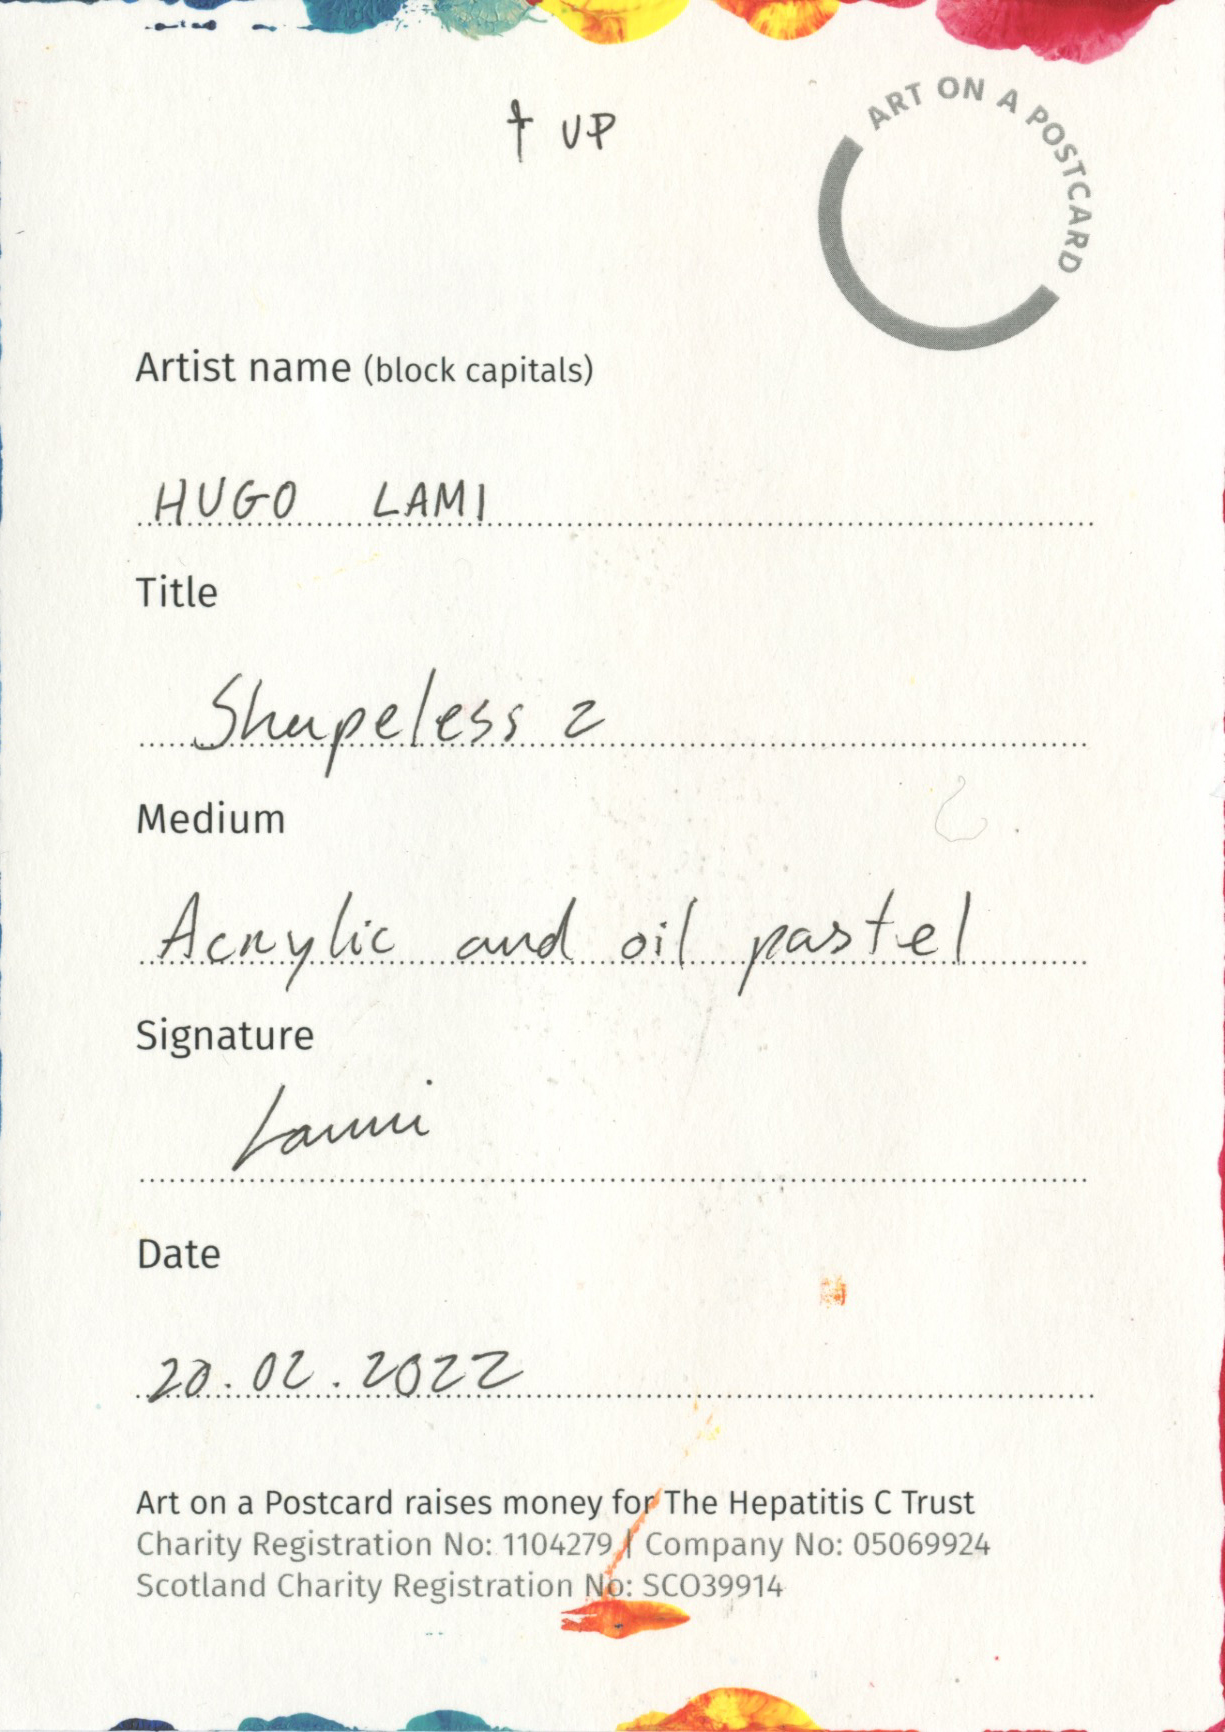 90. Hugo Lami - Shapeless 2 - BACK